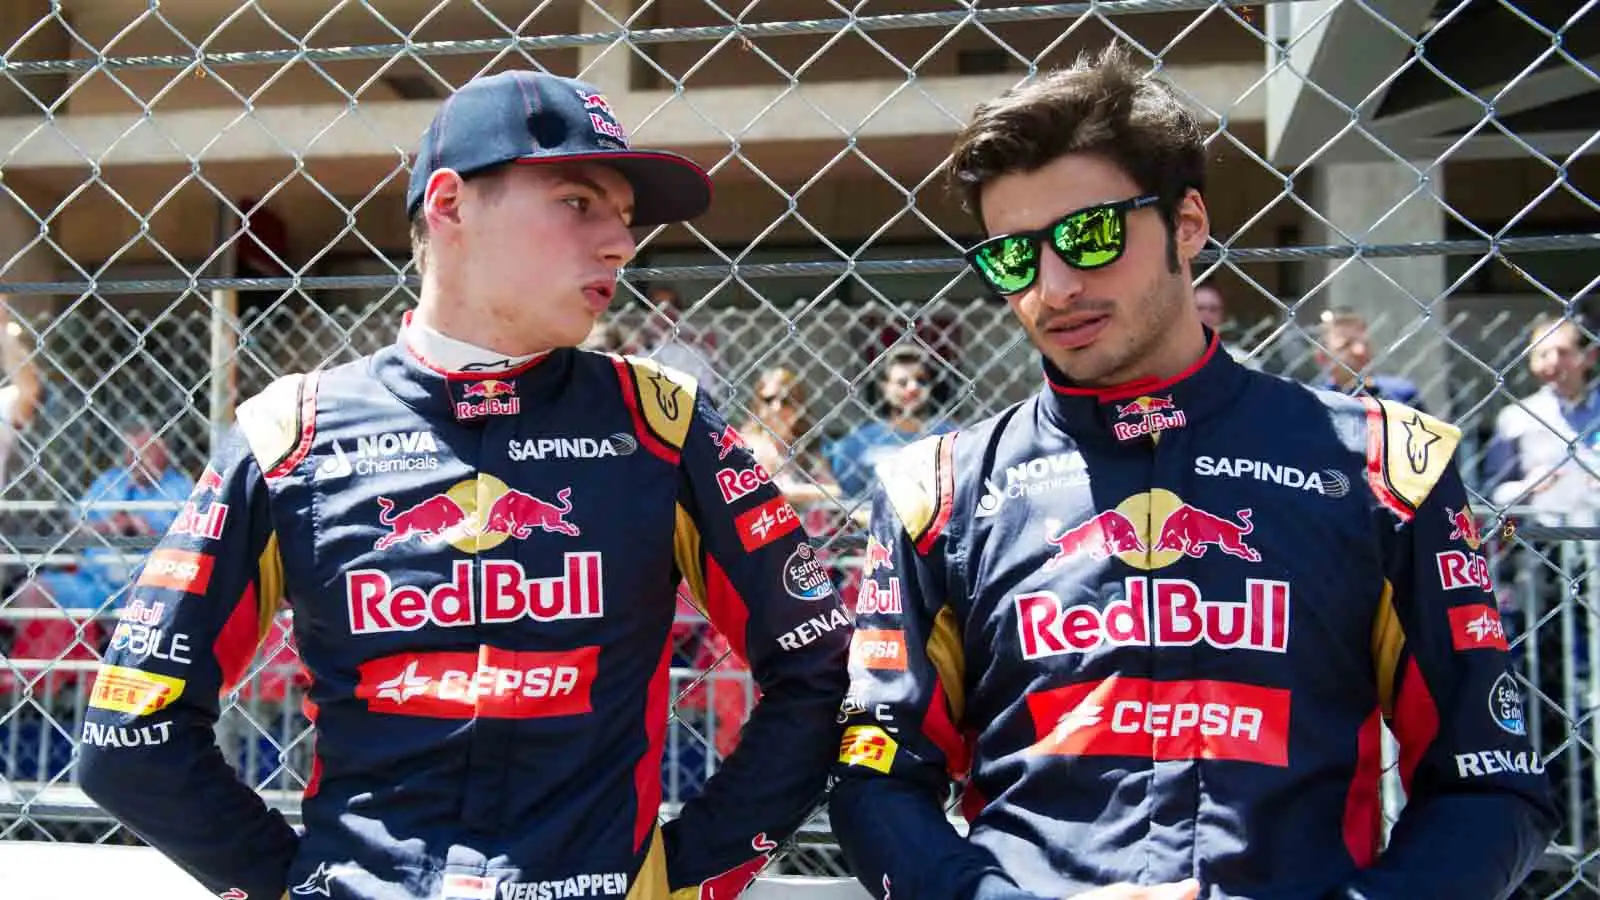 Toro Rosso drivers Max Verstappen and Carlos Sainz on the grid at the 2015 Monaco Grand Prix.